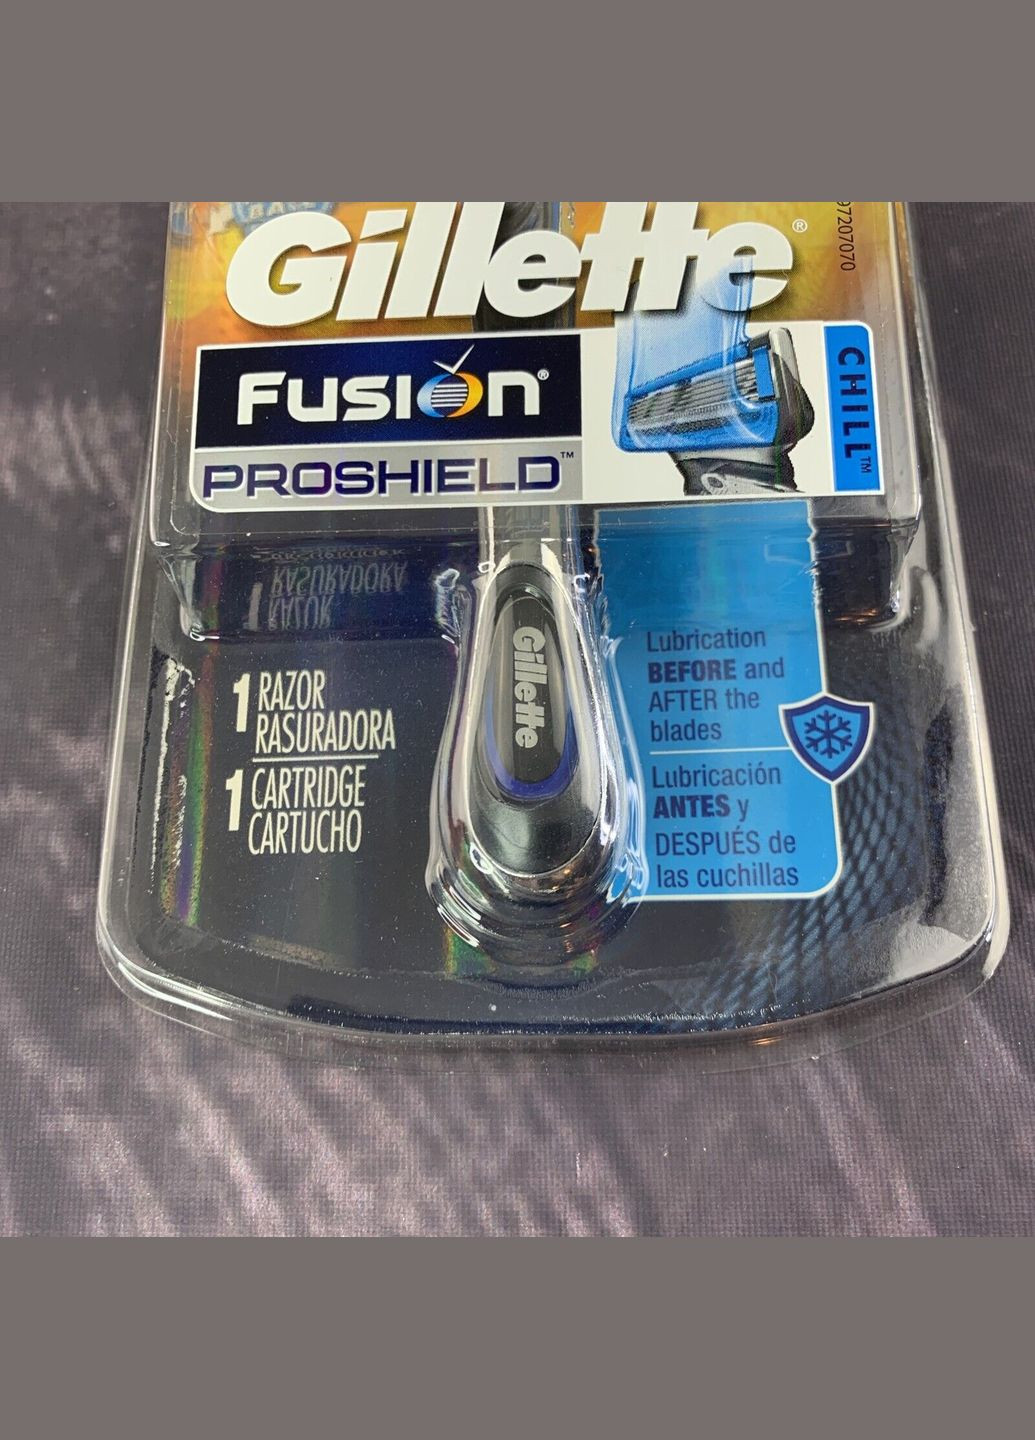 Бритва чоловіча ProGlide Chill (1 станок 1 картридж) Made in America Gillette (278773553)